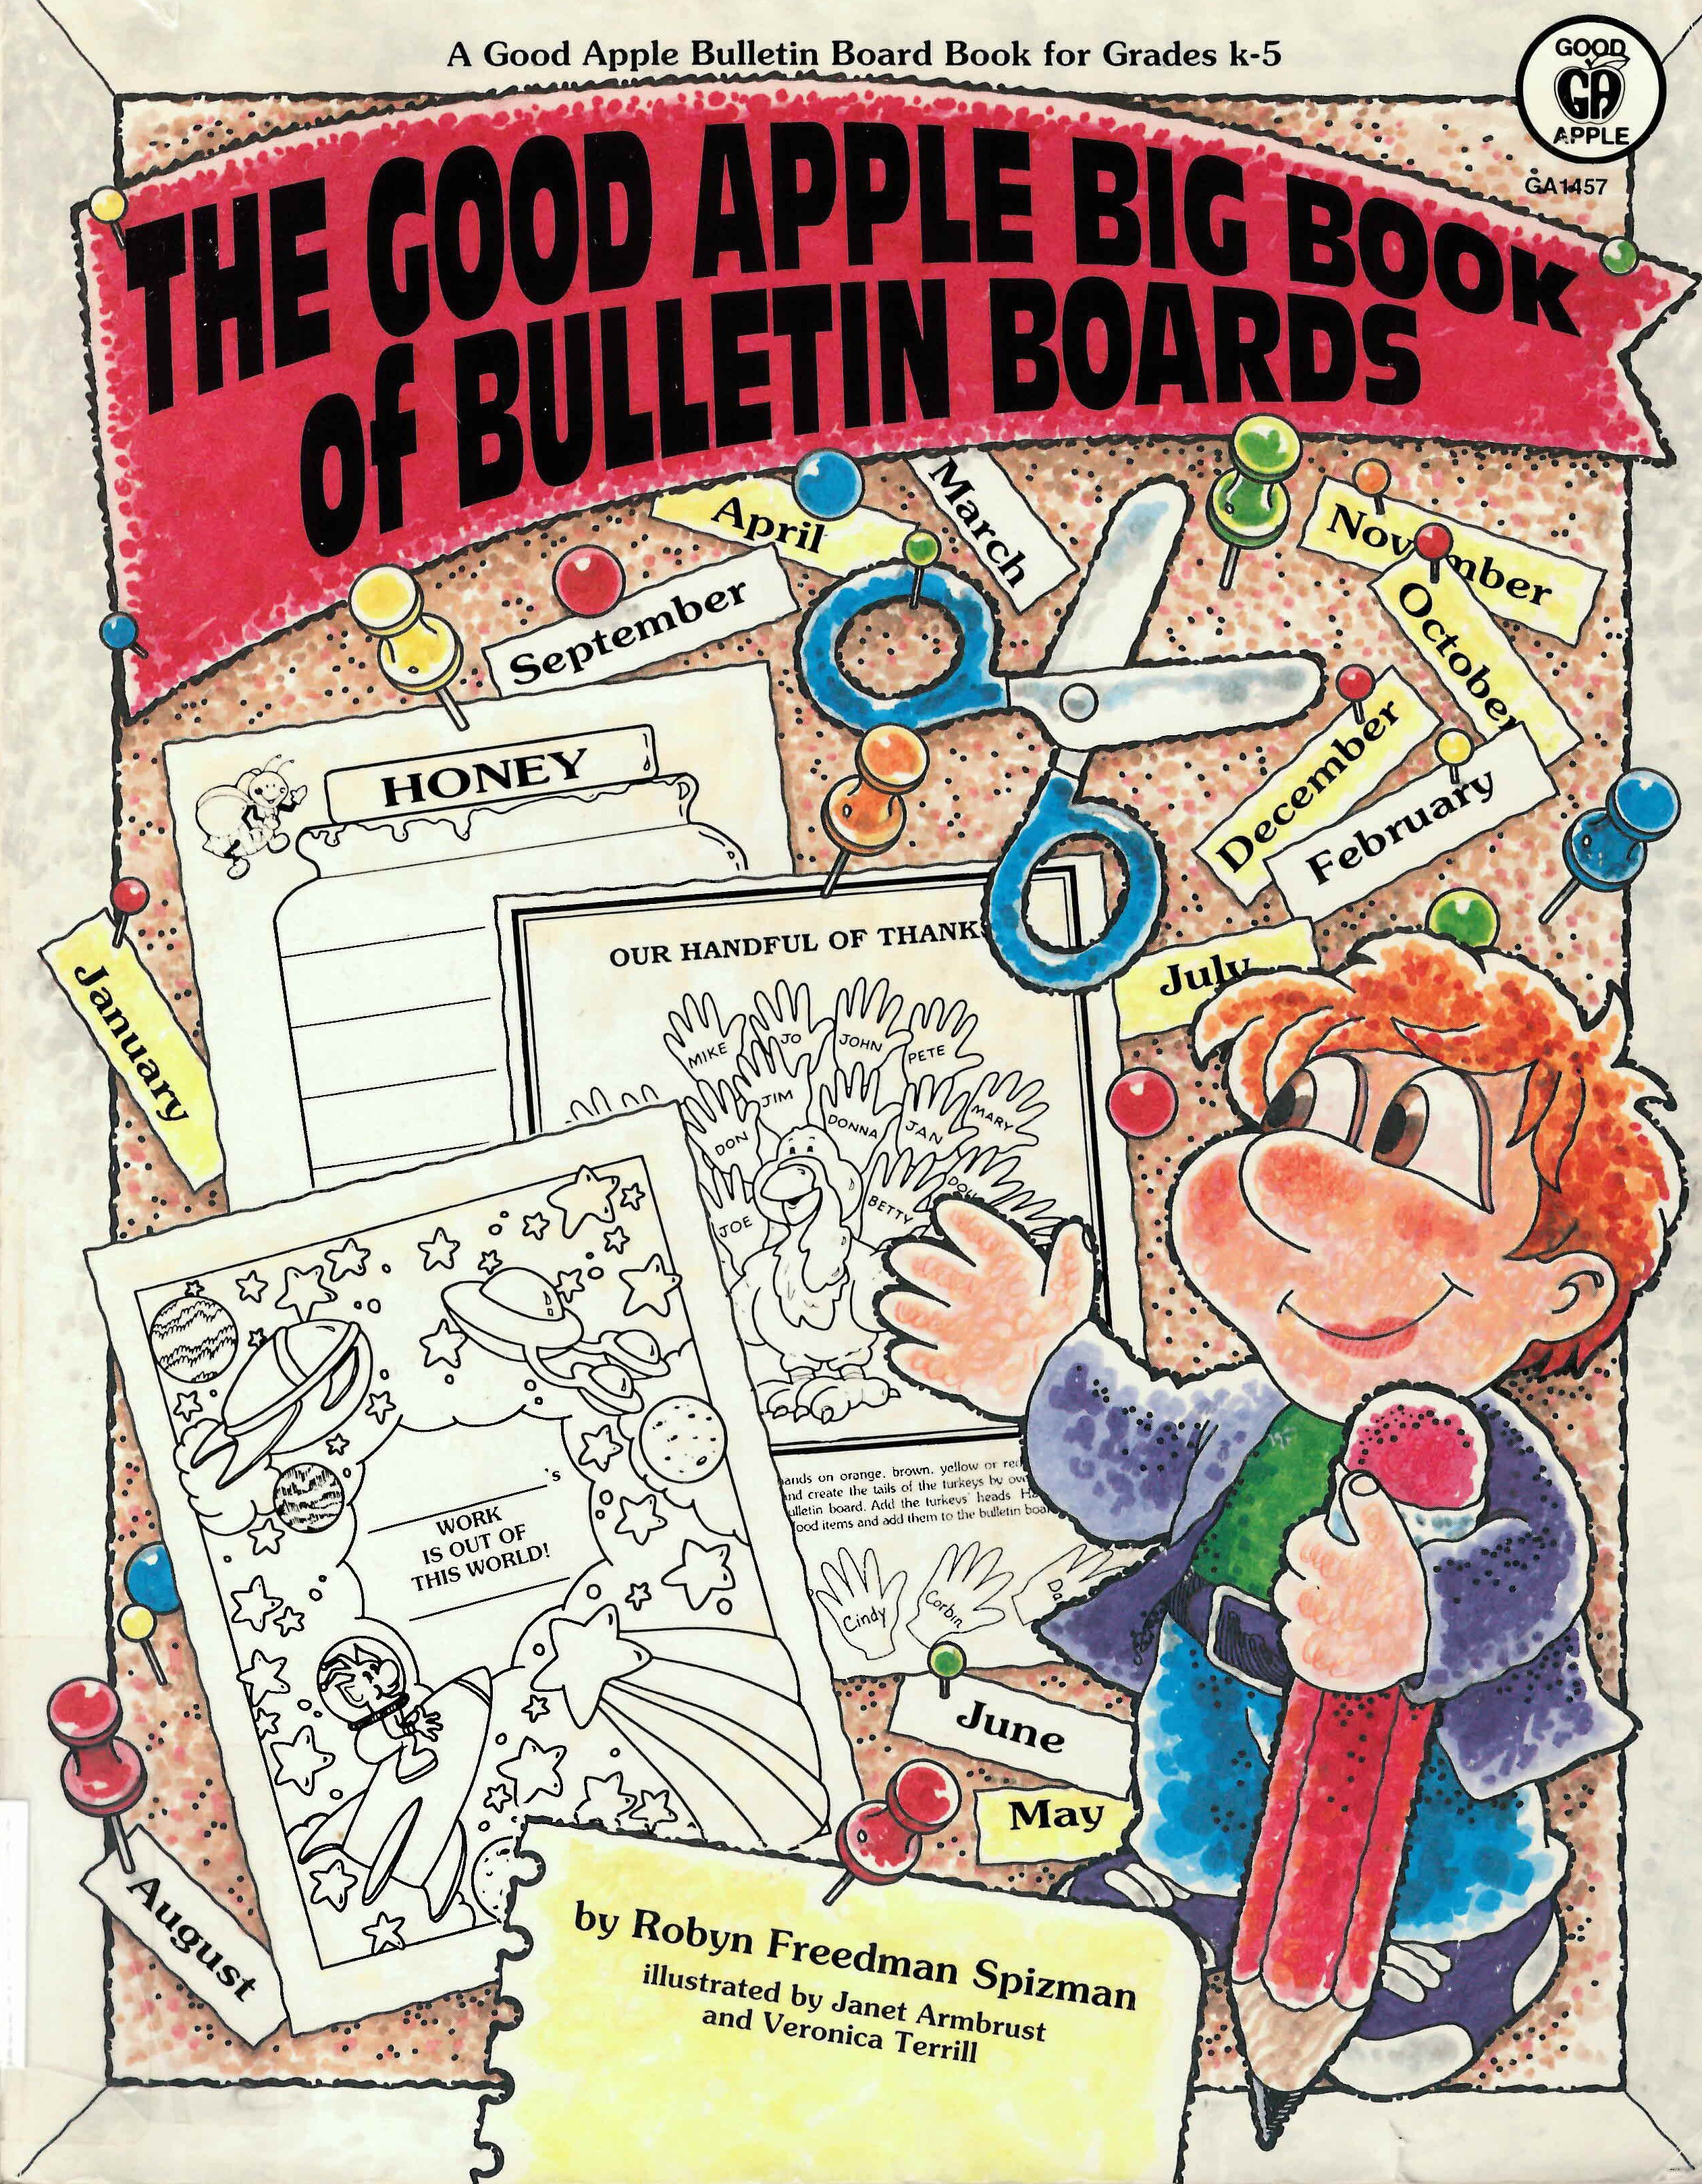 The Good Apple big book of bulletin boards